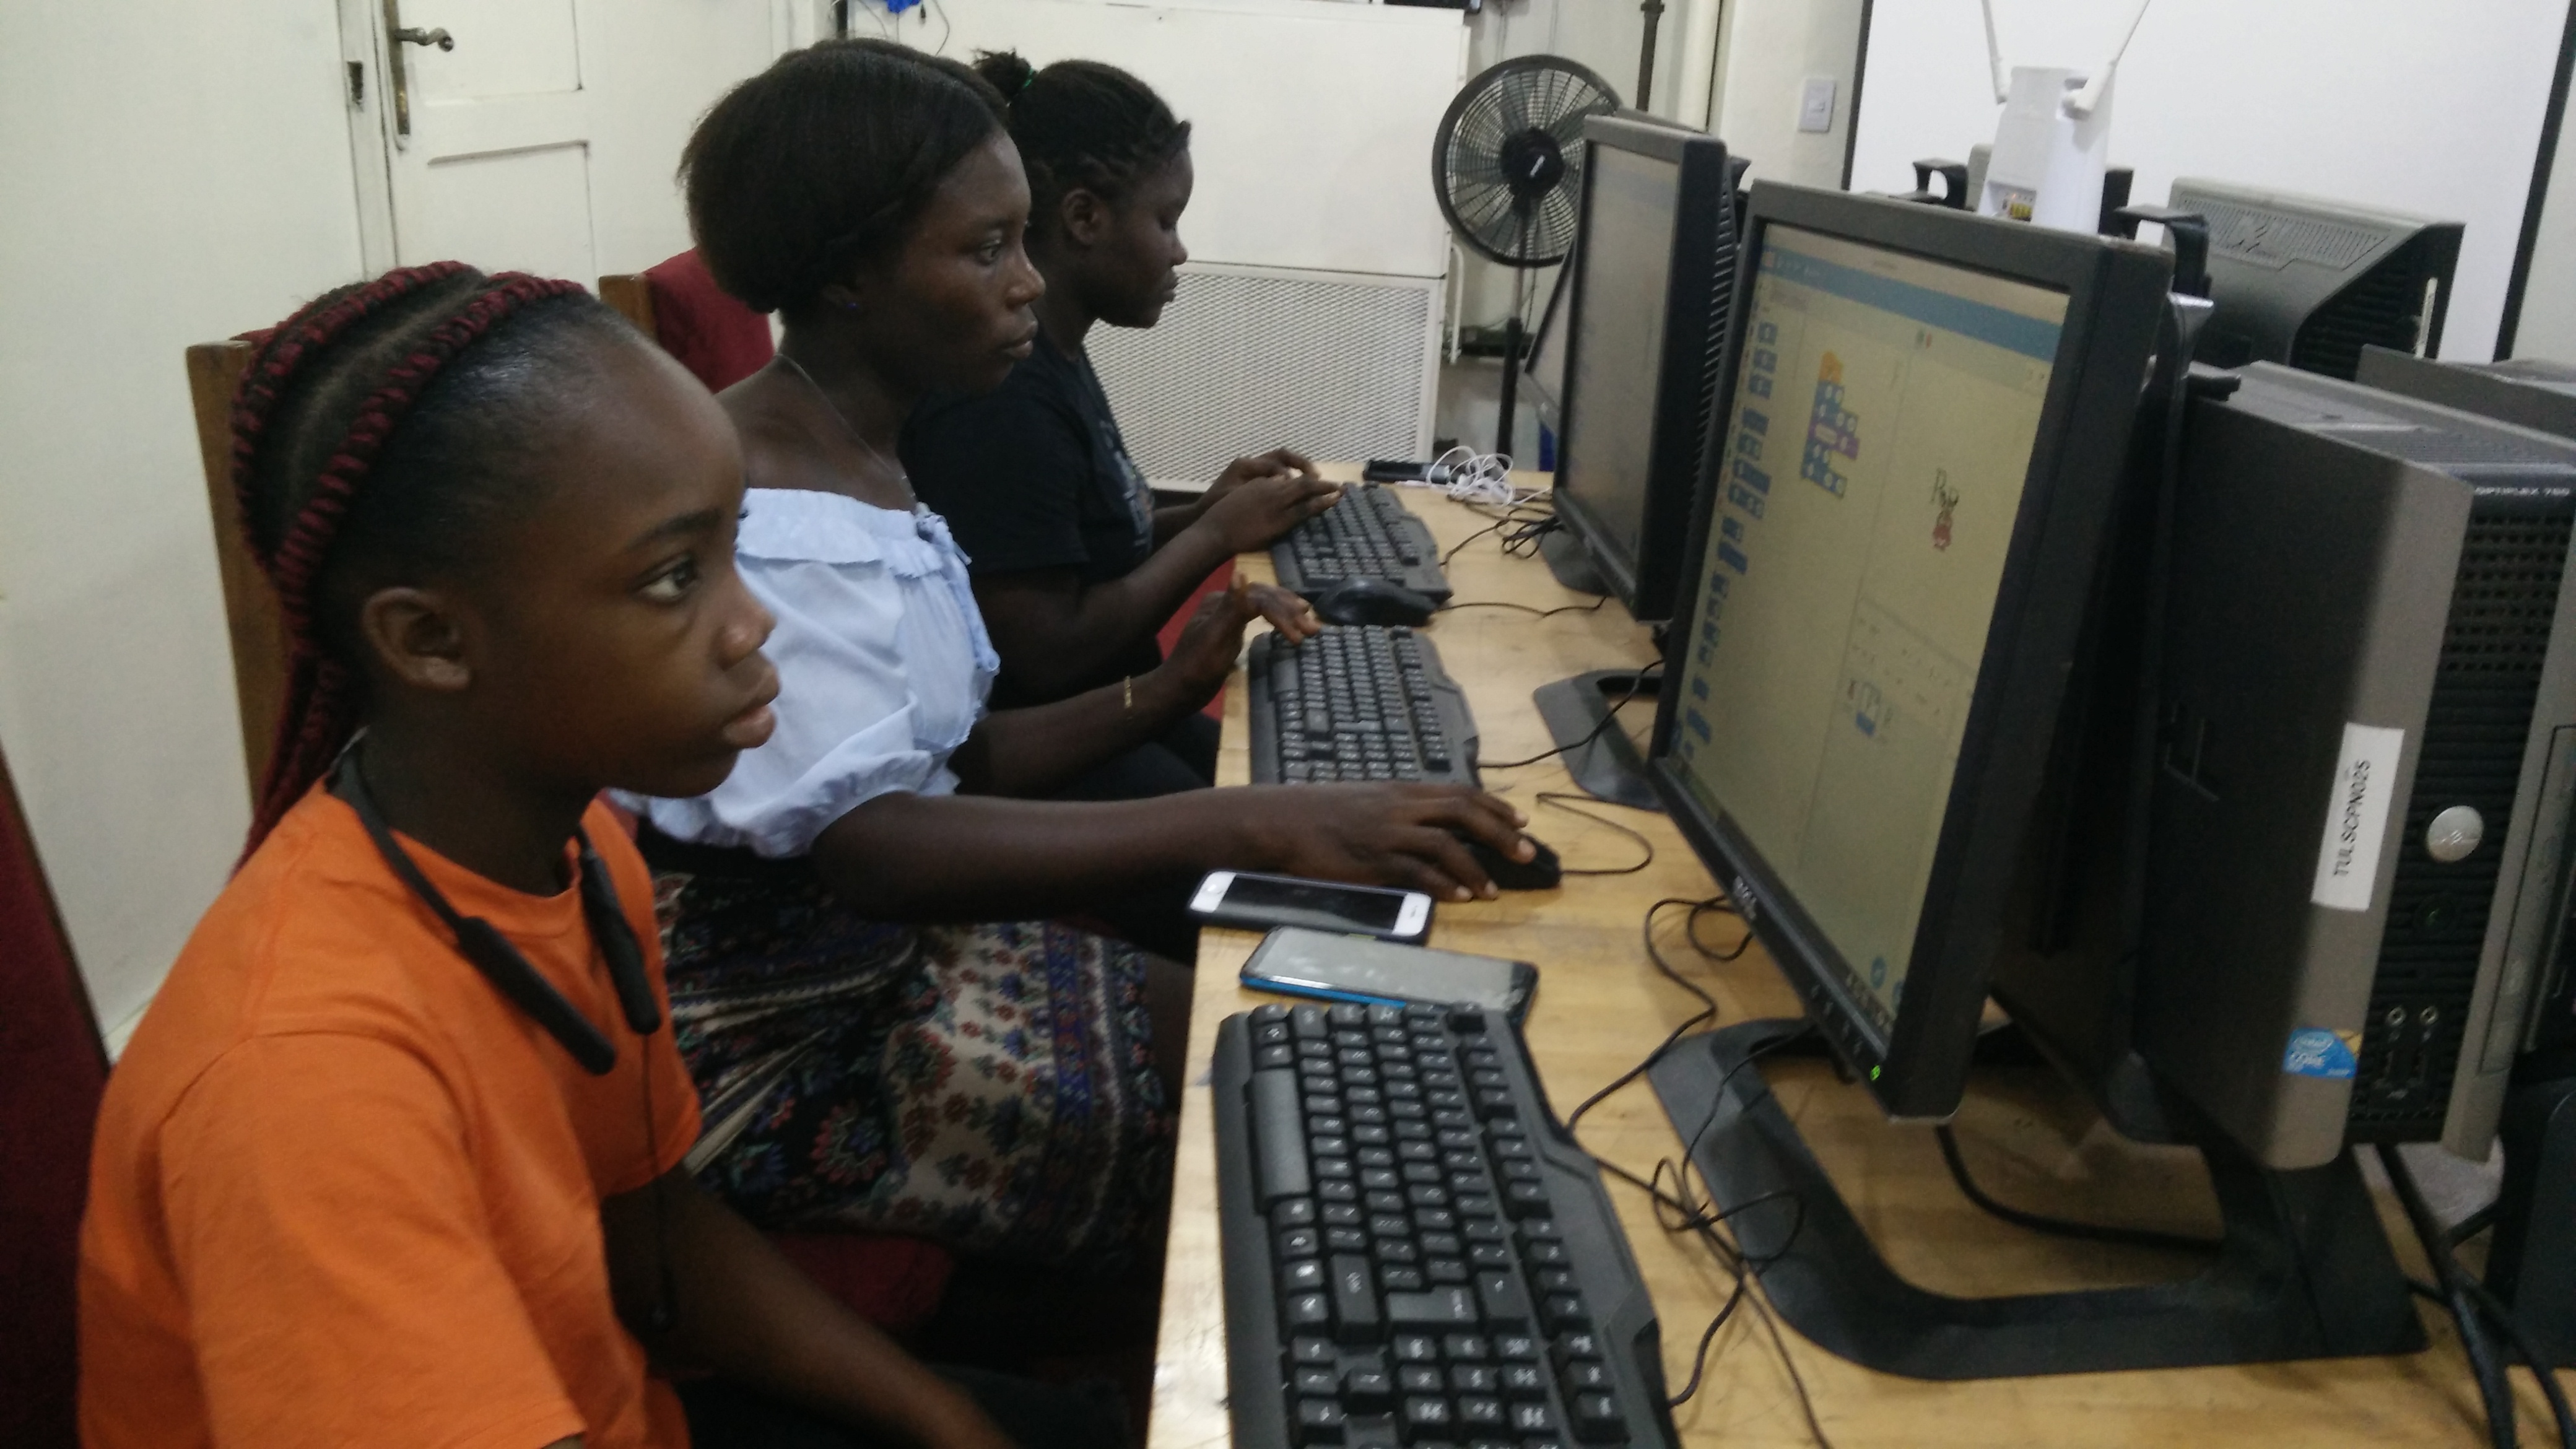 Freena, Comfort, and Aminata programming with Scratch